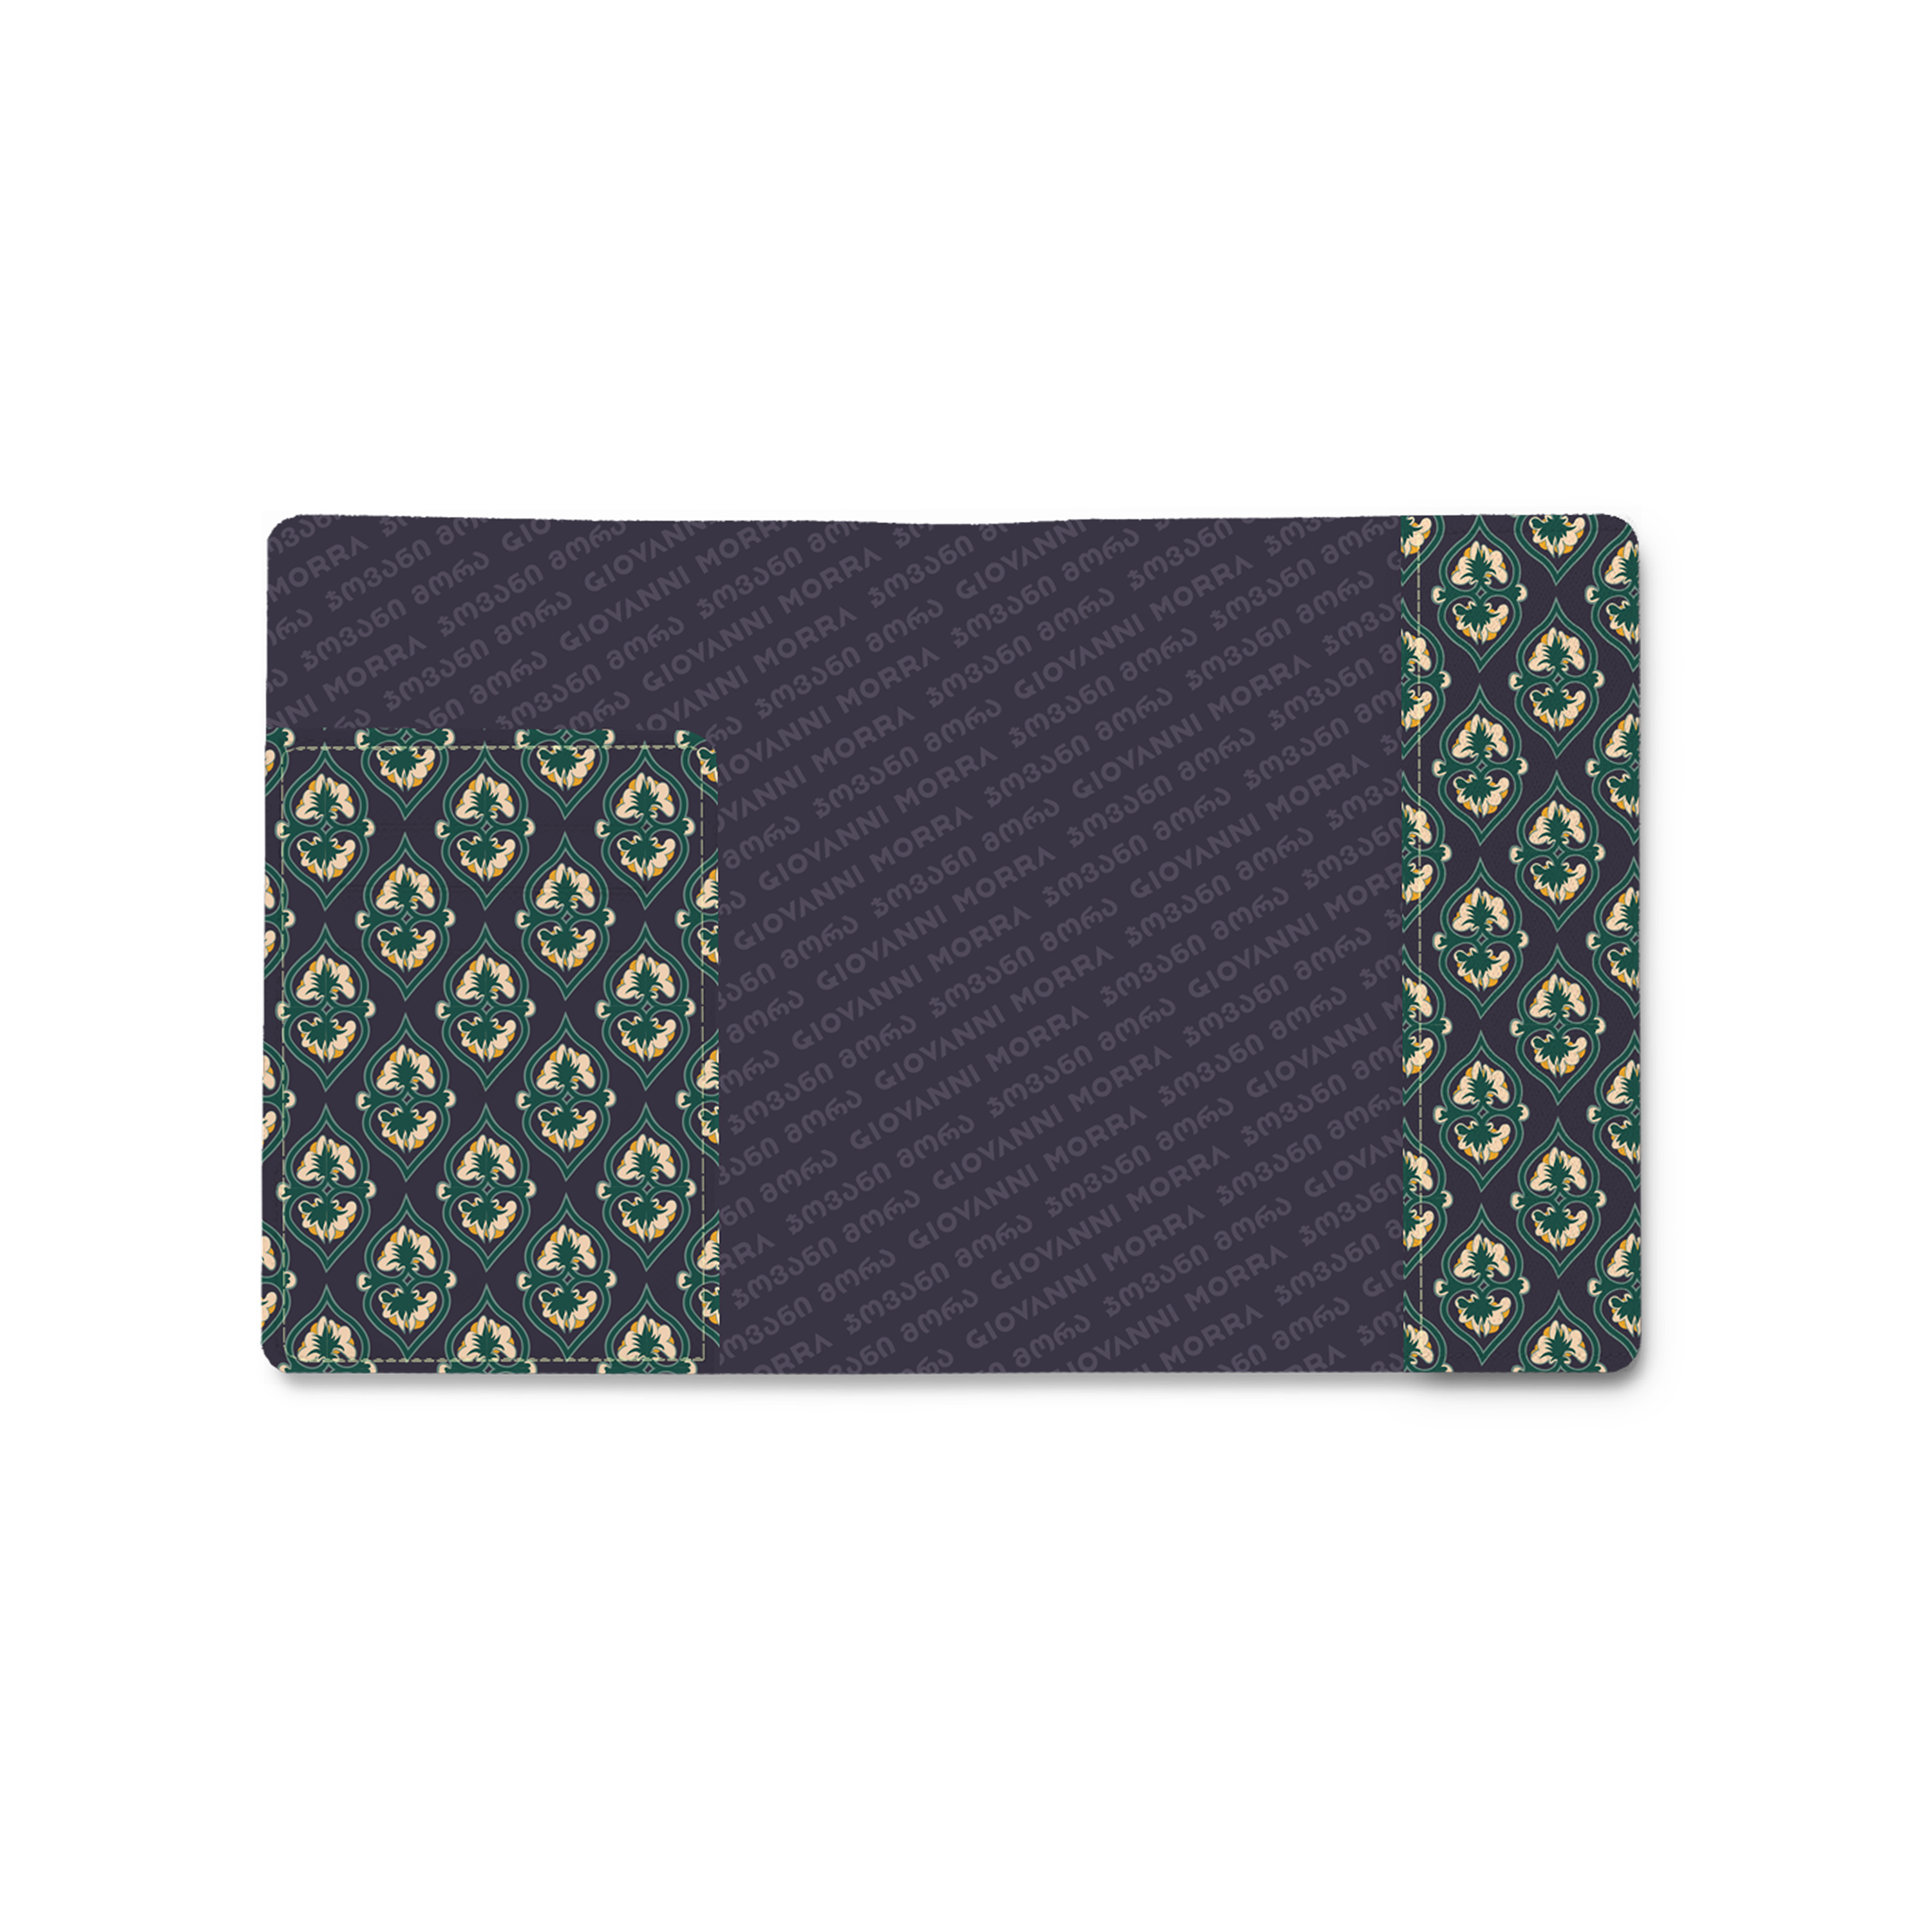 Gulisstsory (Sweetheart) Passport Cover (Green)